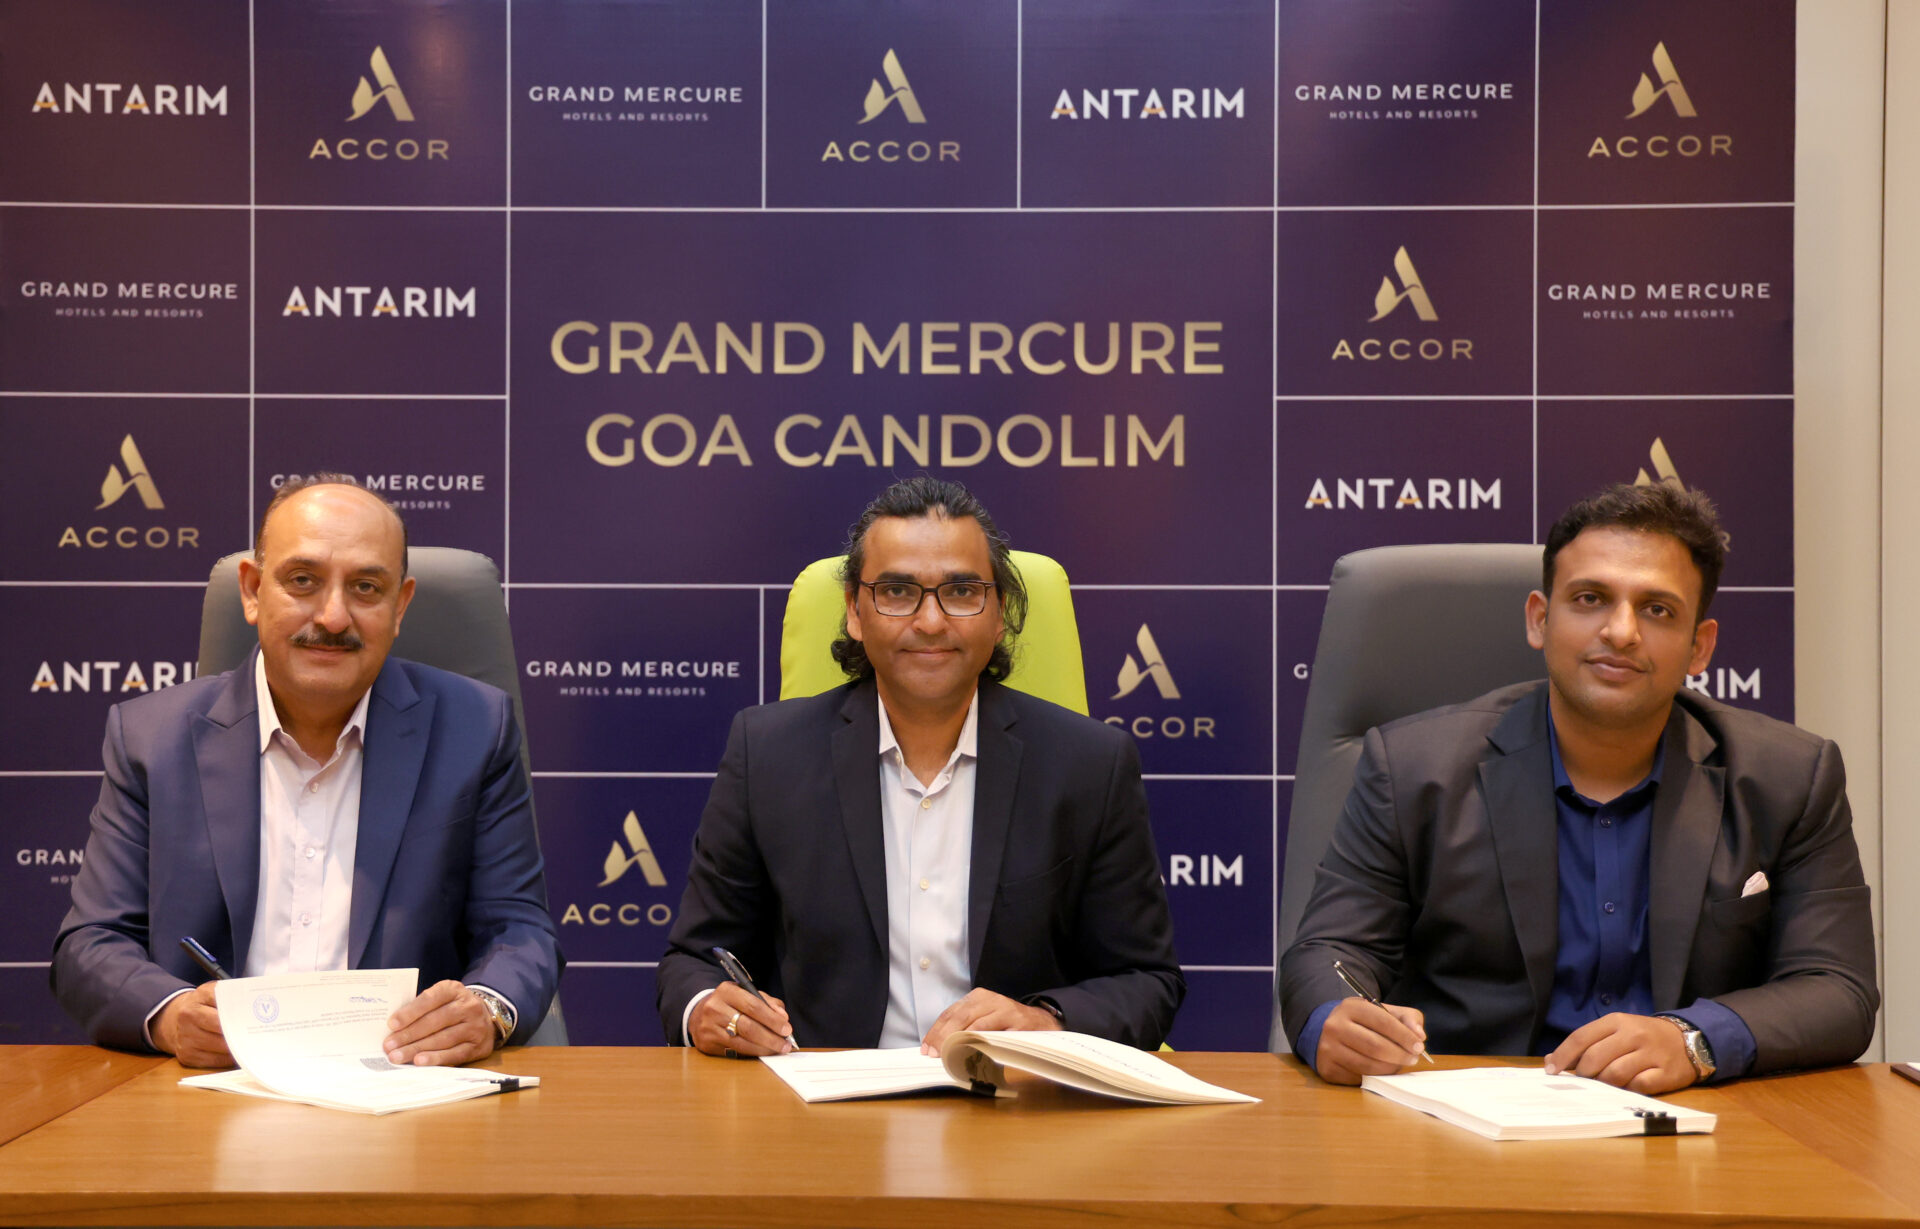 Accor expands its portfolio by signing Grand Mercure Goa, Candolim